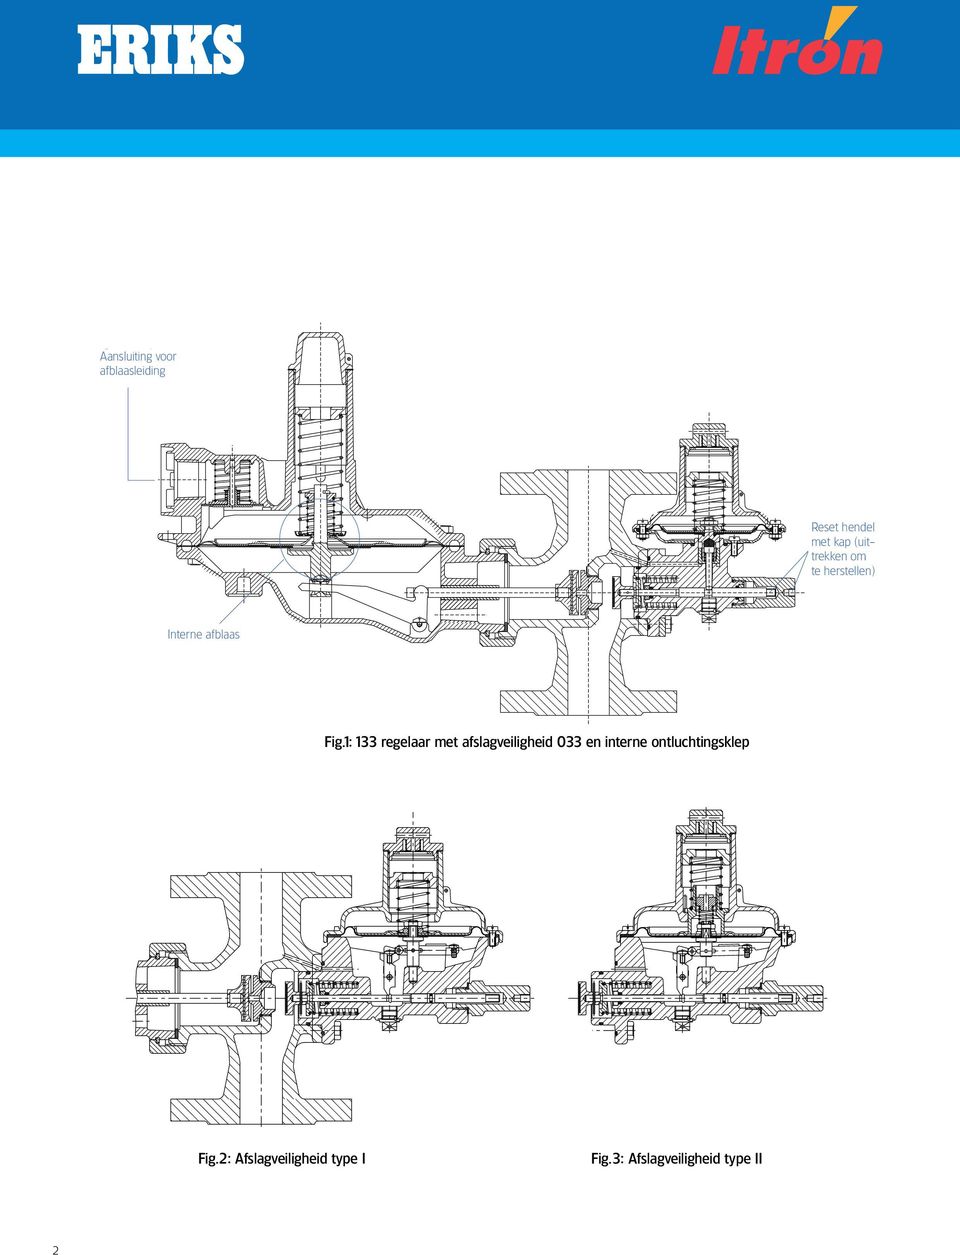 Internal Interne afblaas relief valve assembly Fig.